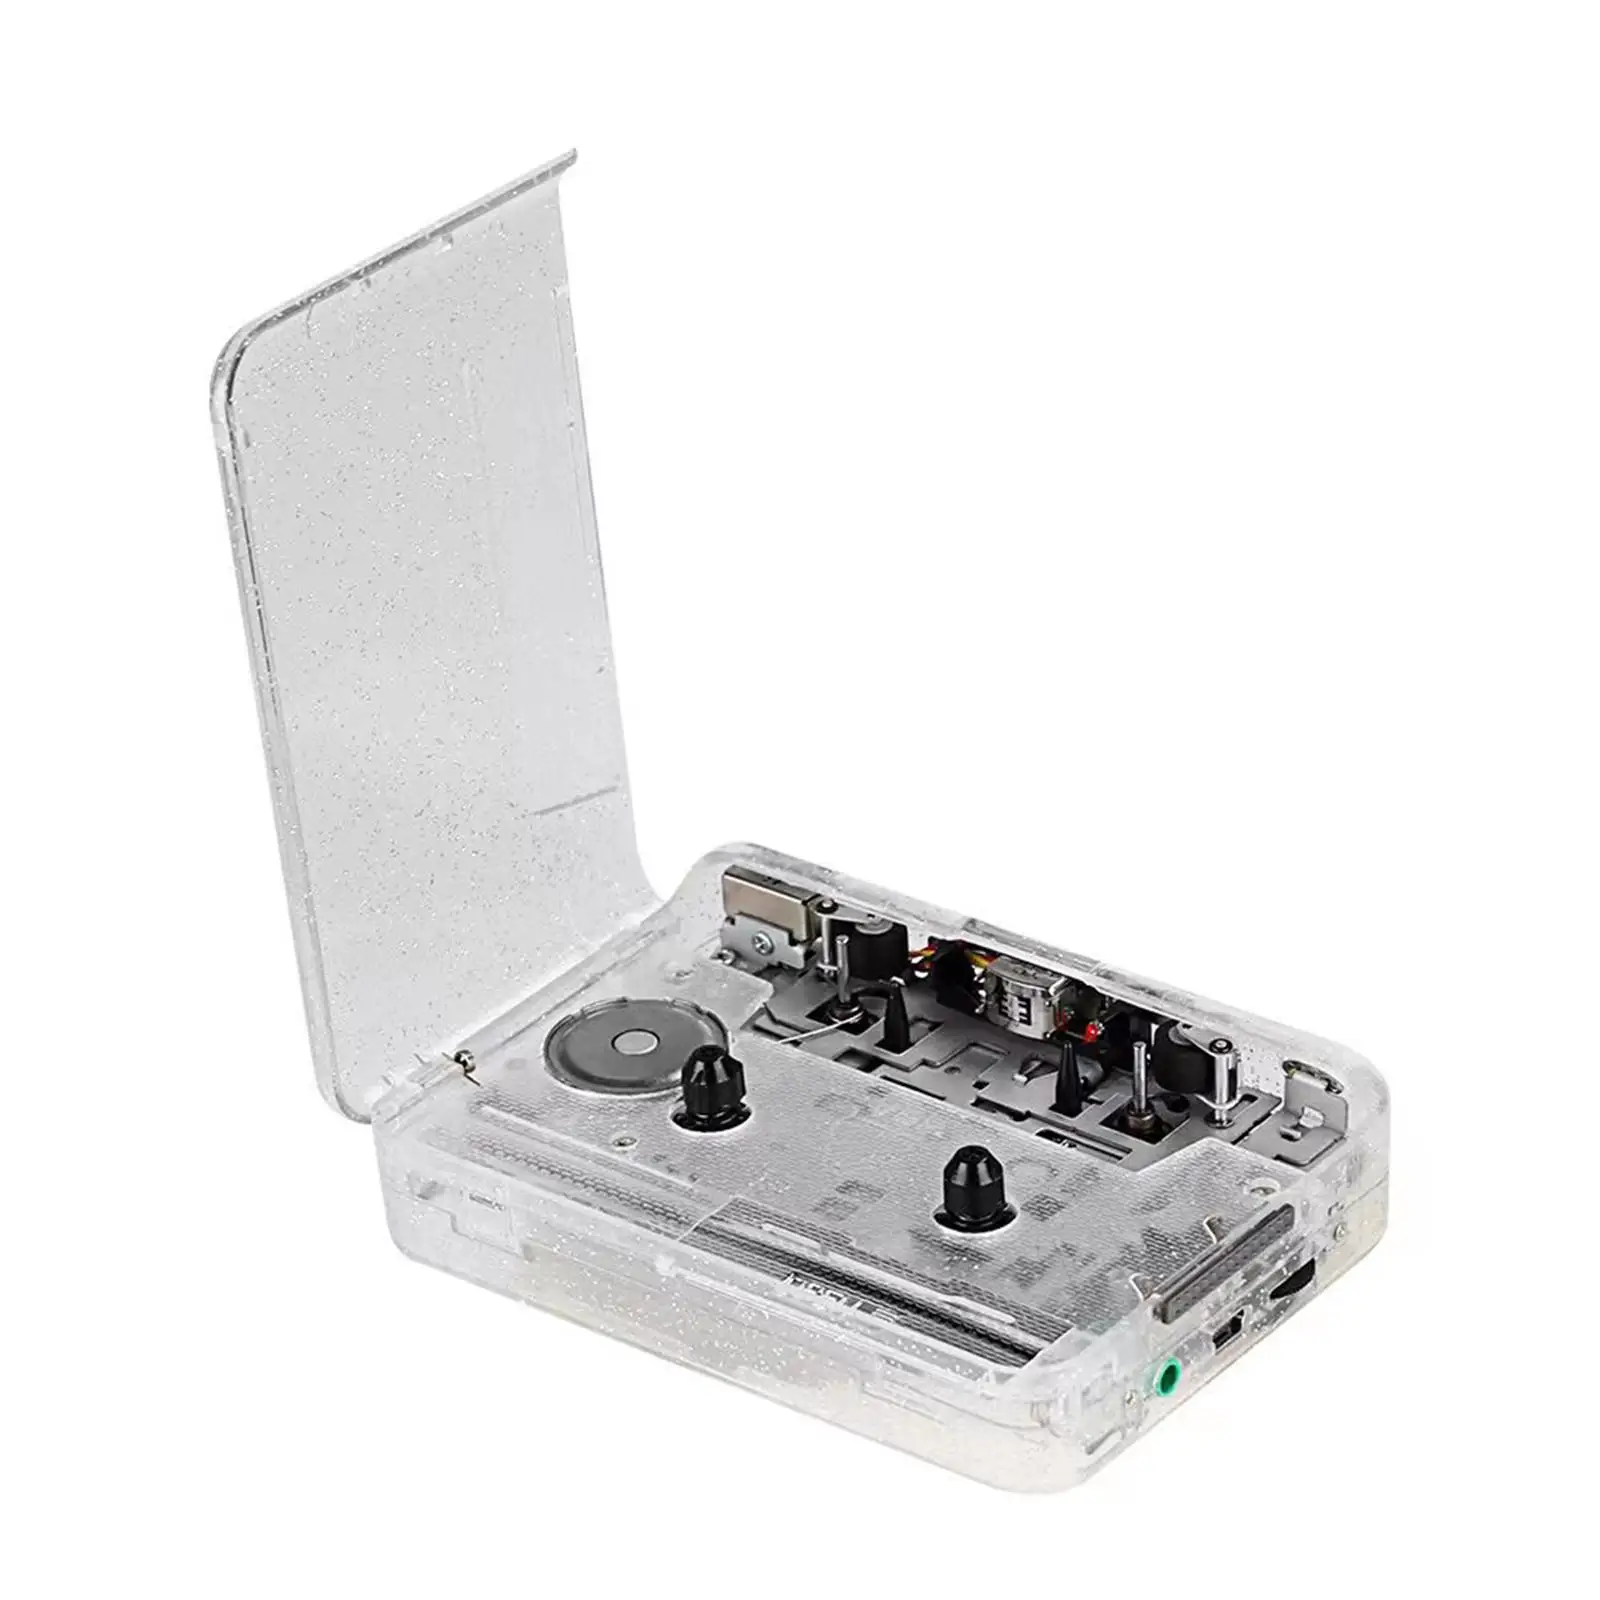 Cassette Player 11x8.1x3.1cm Lightweight Design with Headphones Compact Recorder Audio Music Cassette to MP3 Digital Converter